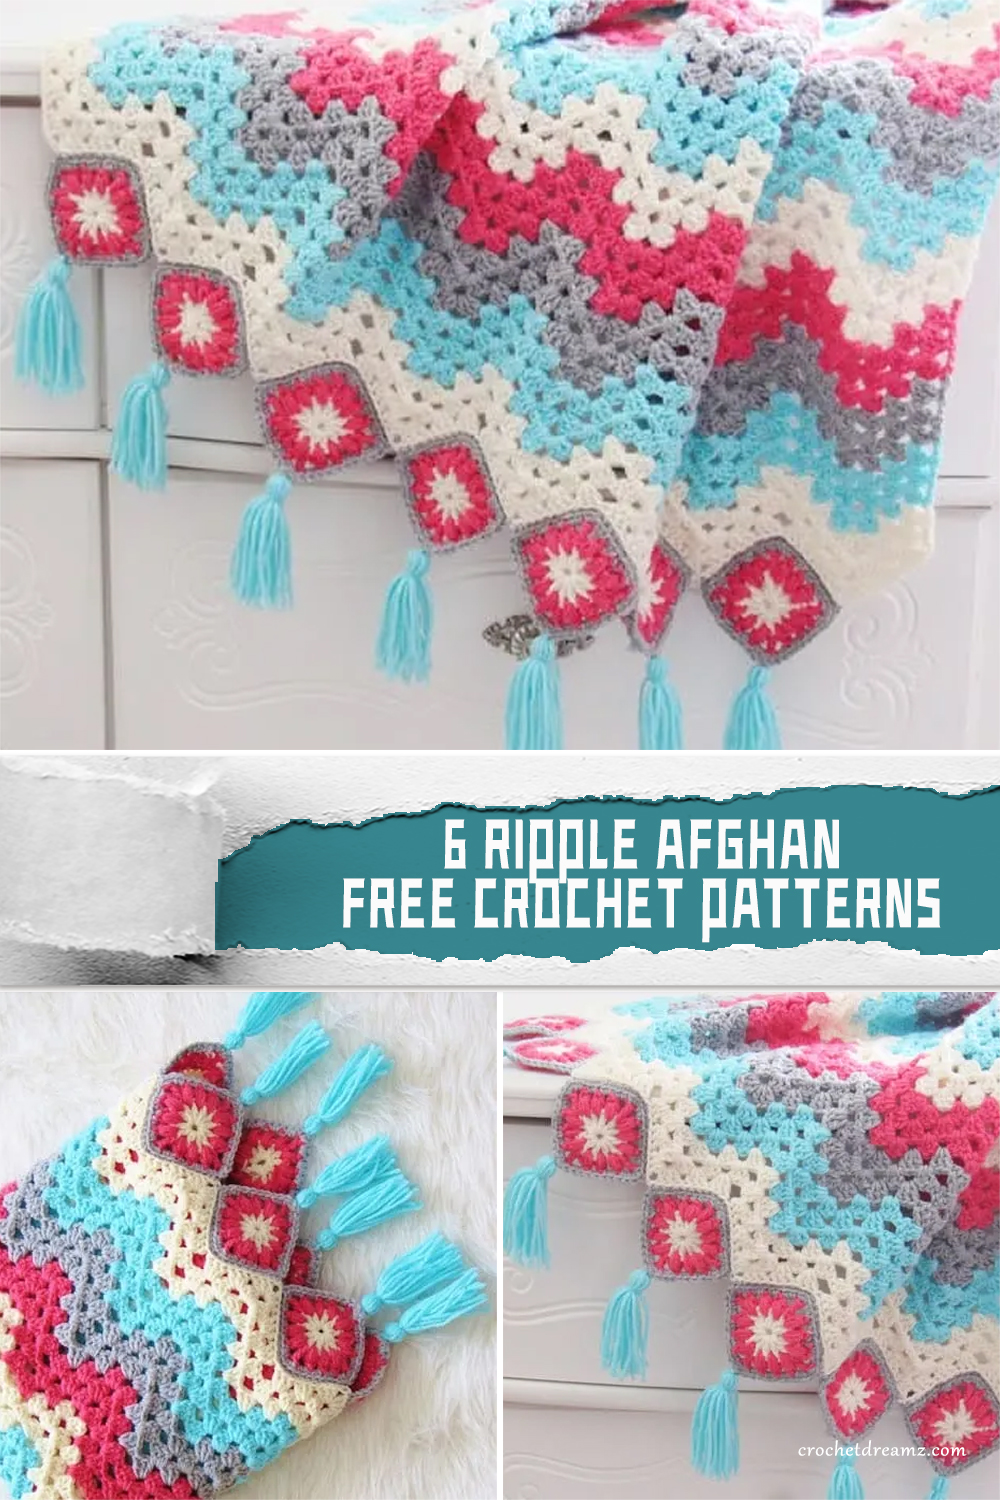 6 Amazing Ripple Afghan Crochet Patterns - FREE - iGOODideas.com